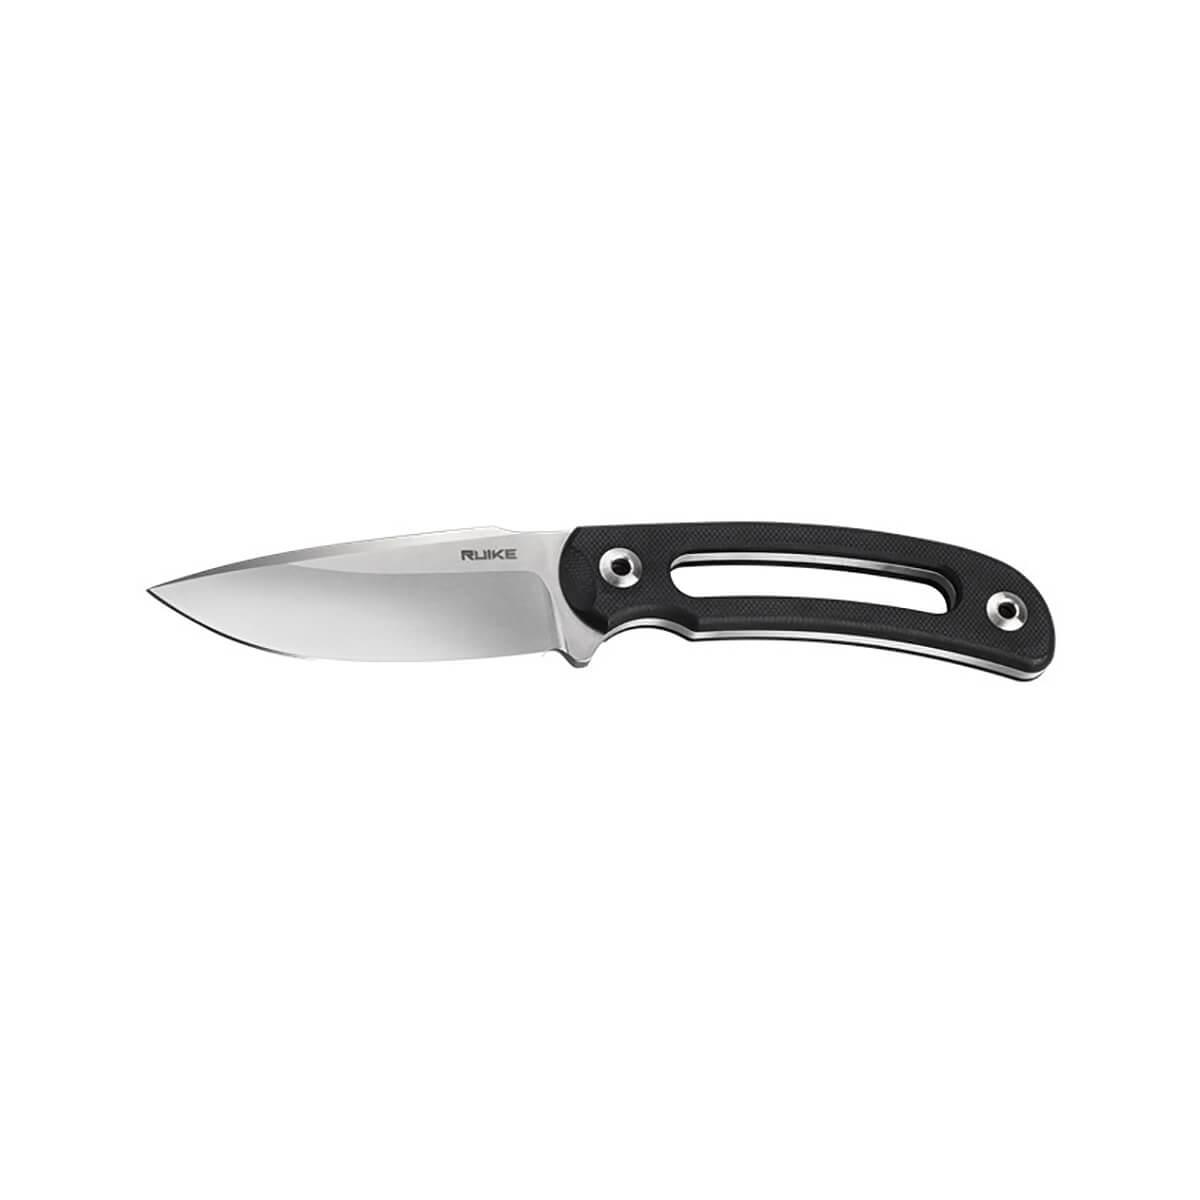  F815 Fixed Blade Knife